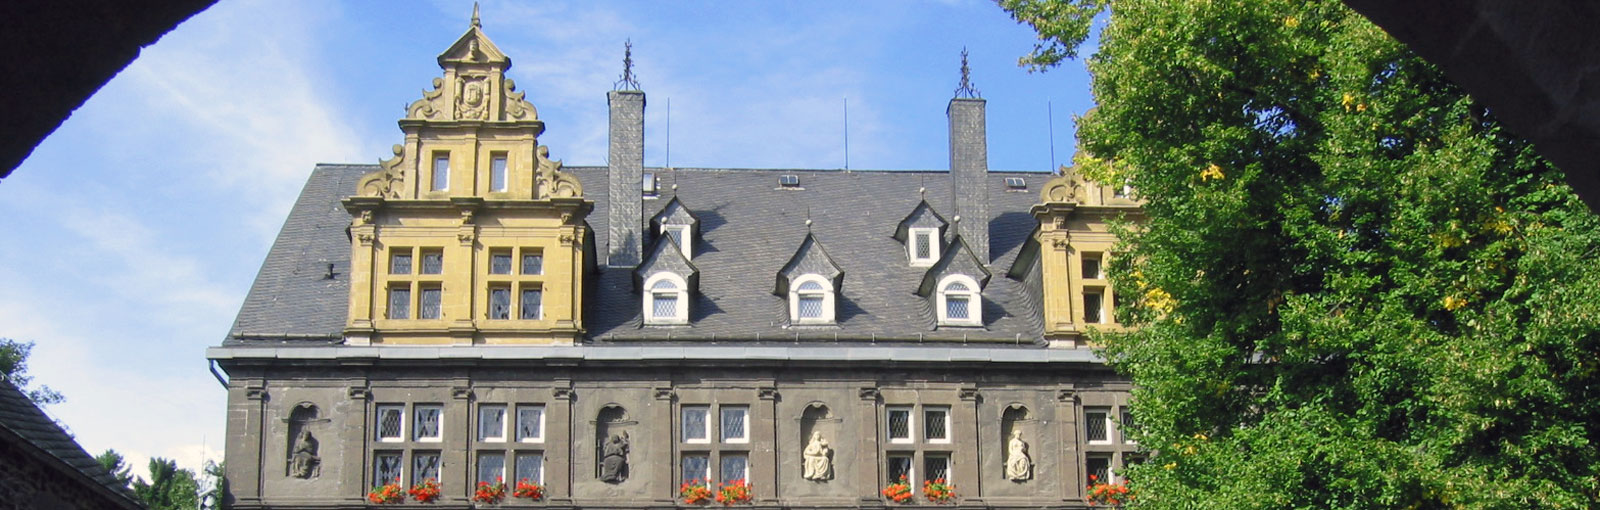 Schloss Torbogen